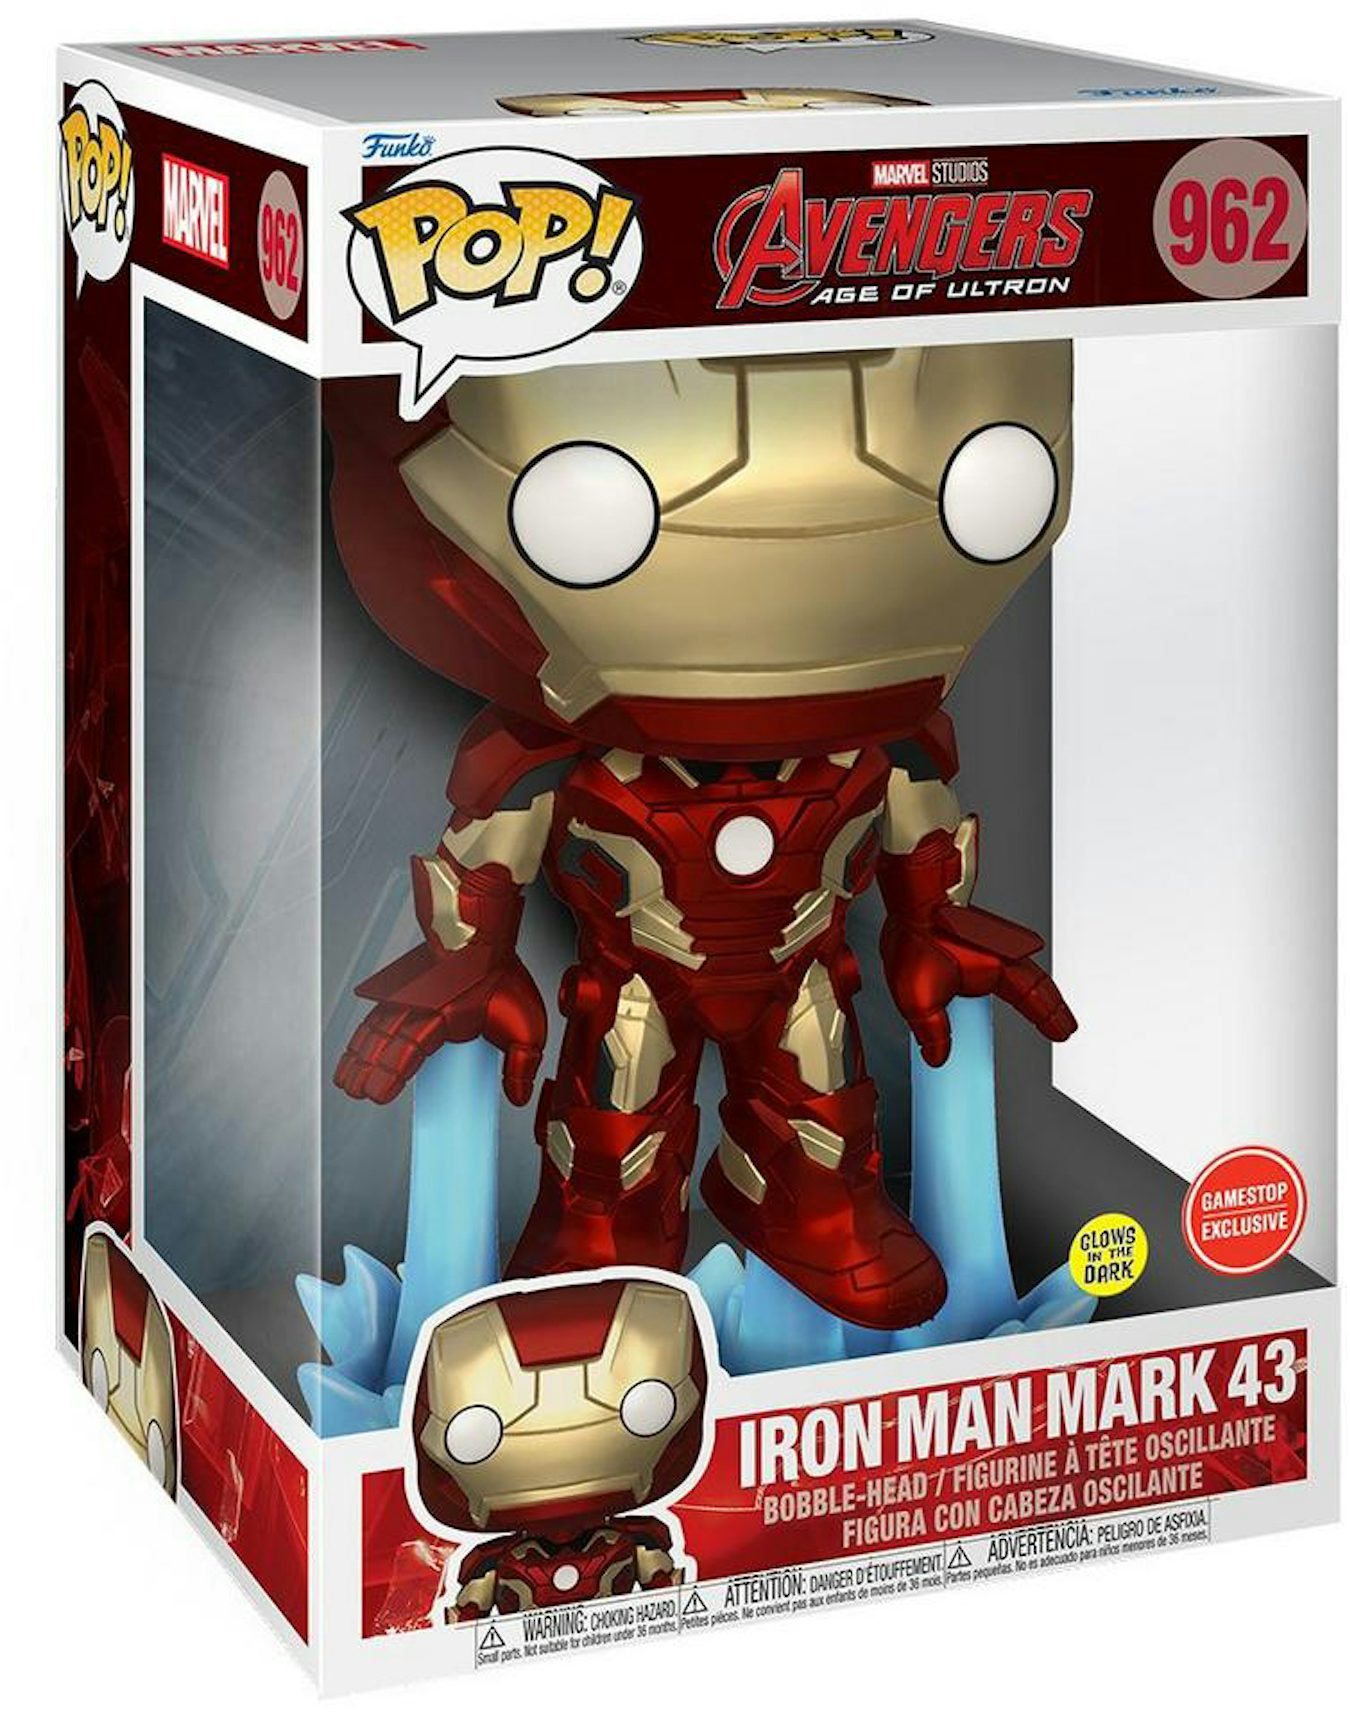 Funko Pop! Marvel Studios Avengers Age Of Ultron Iron Man Mark 43 GITD 10  Inch GameStop Exclusive Figure #962 - FW21 - US